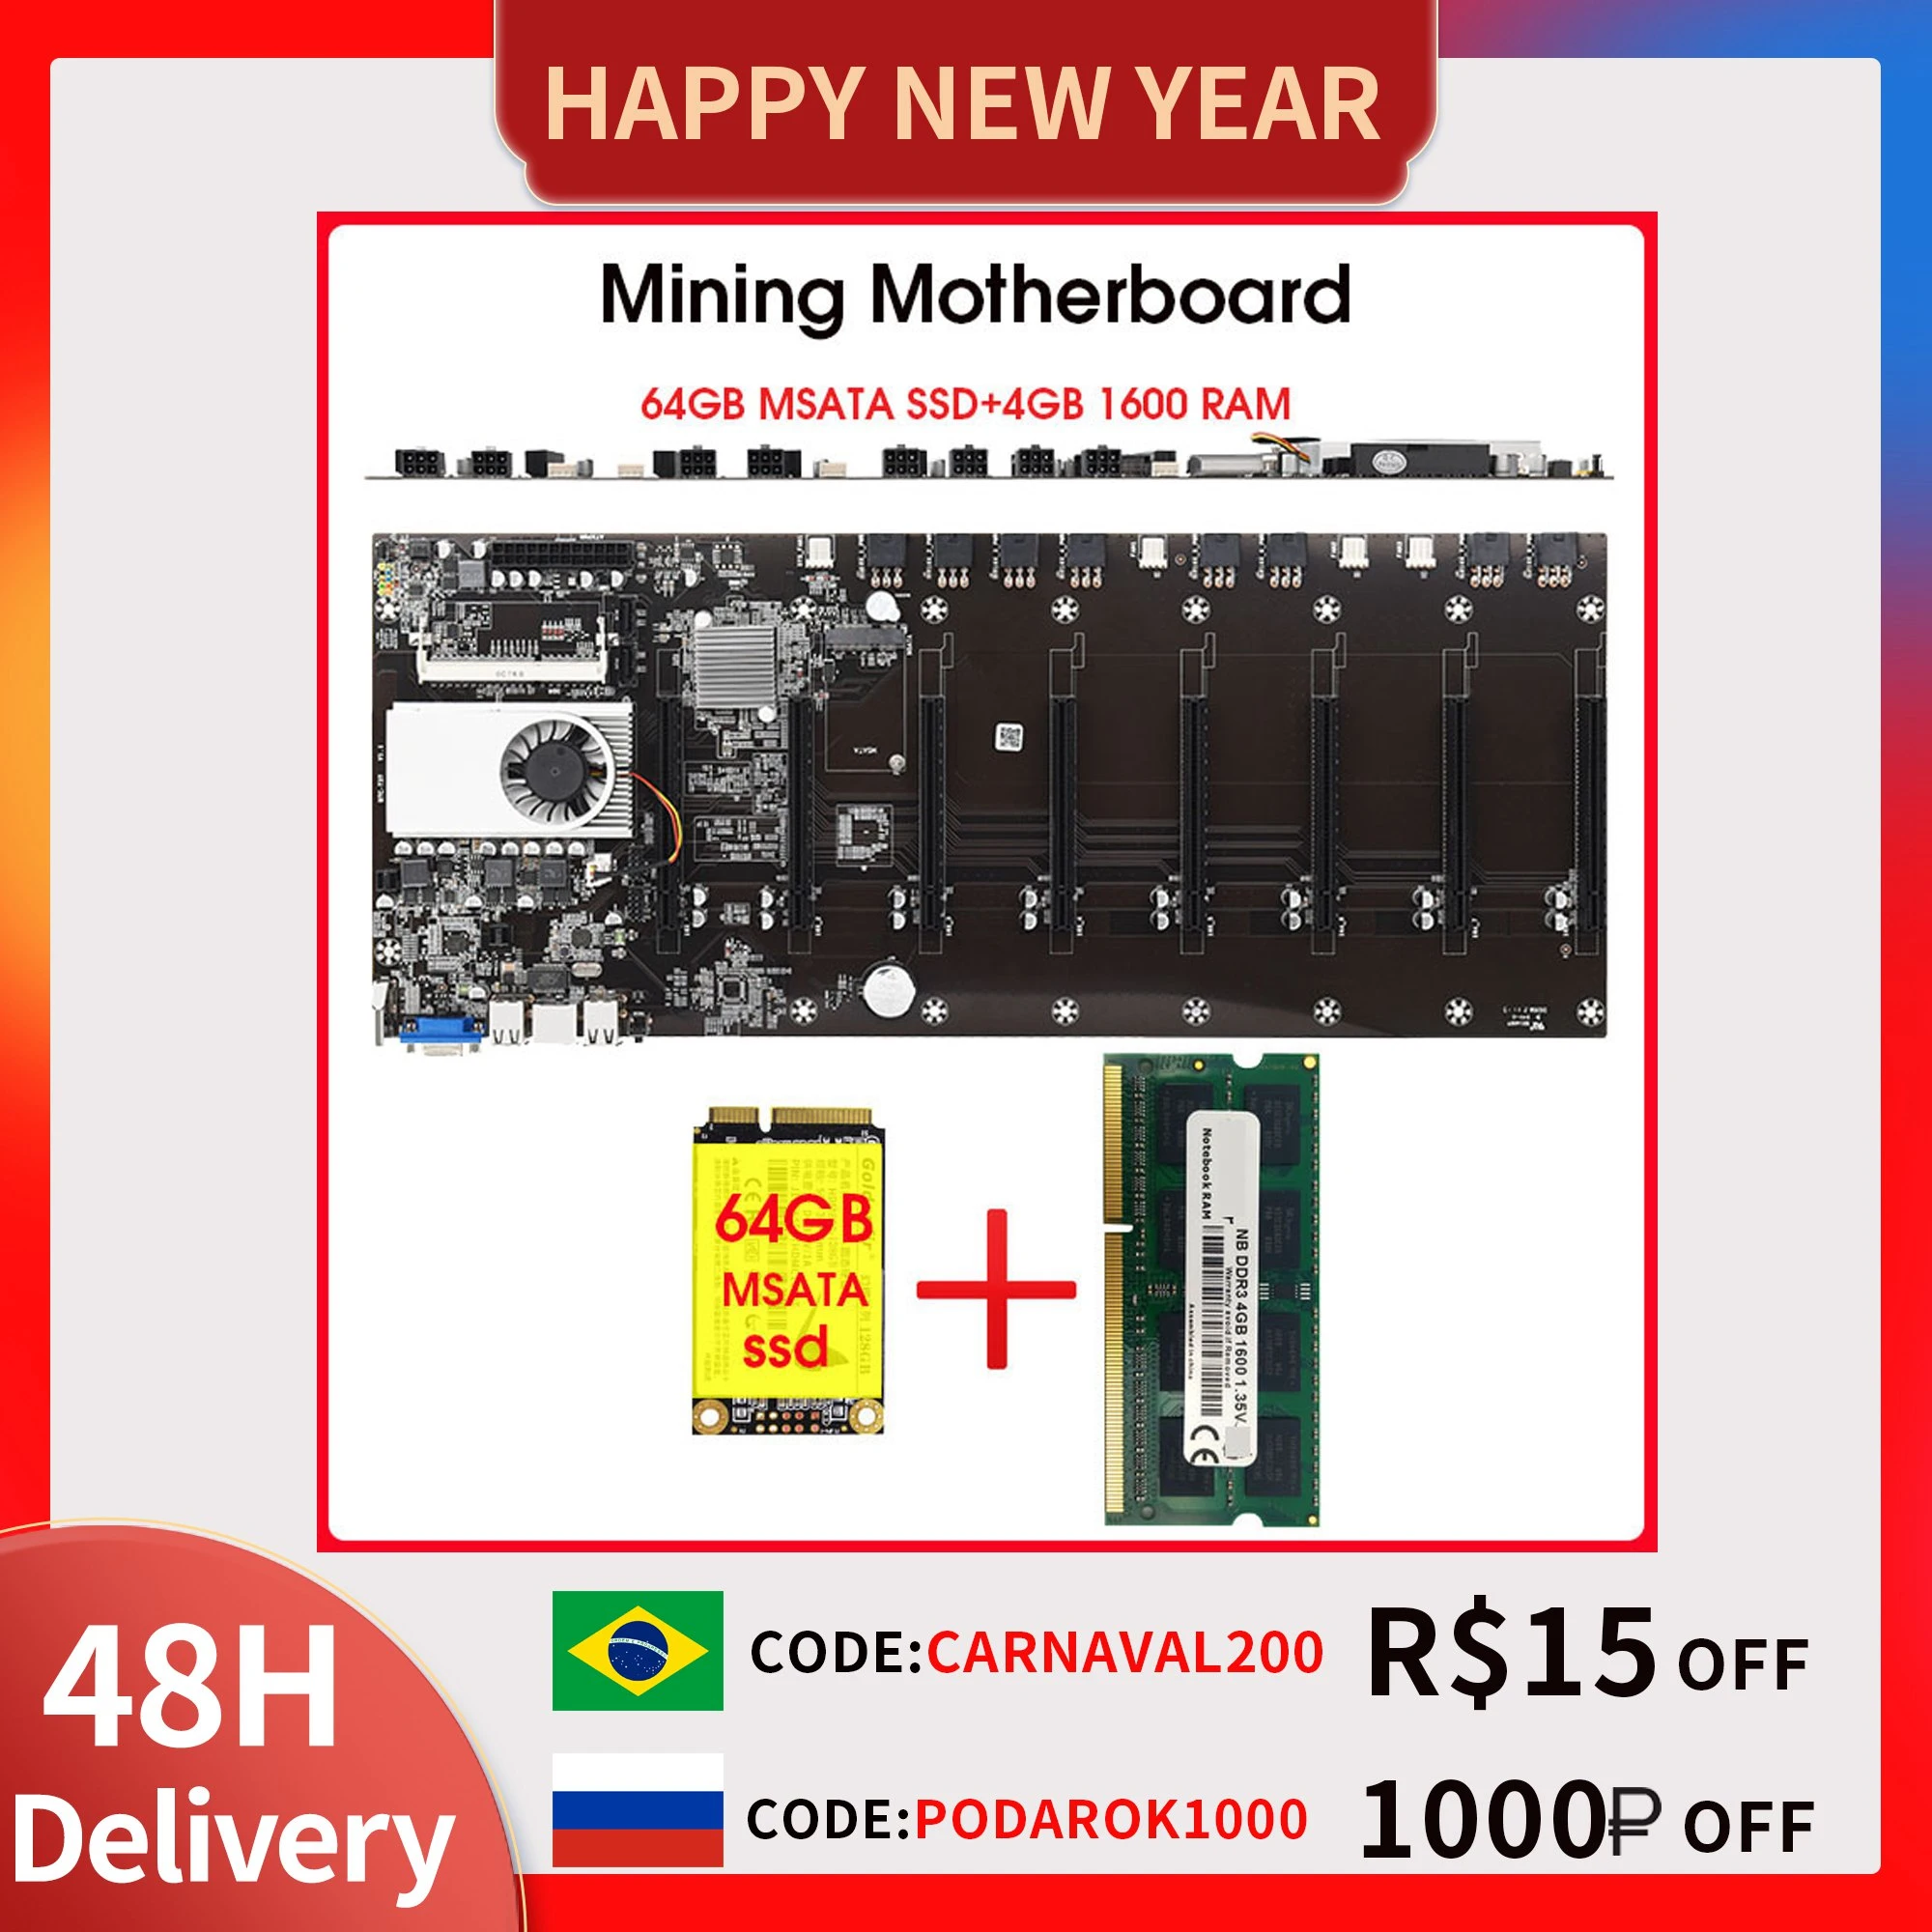 Riserless mining motherboard 8 GPU Bitcoin Crypto Etherum Mining  with 64GB MSATA SSD  DDR3 4GB 1600MHZ RAM SET